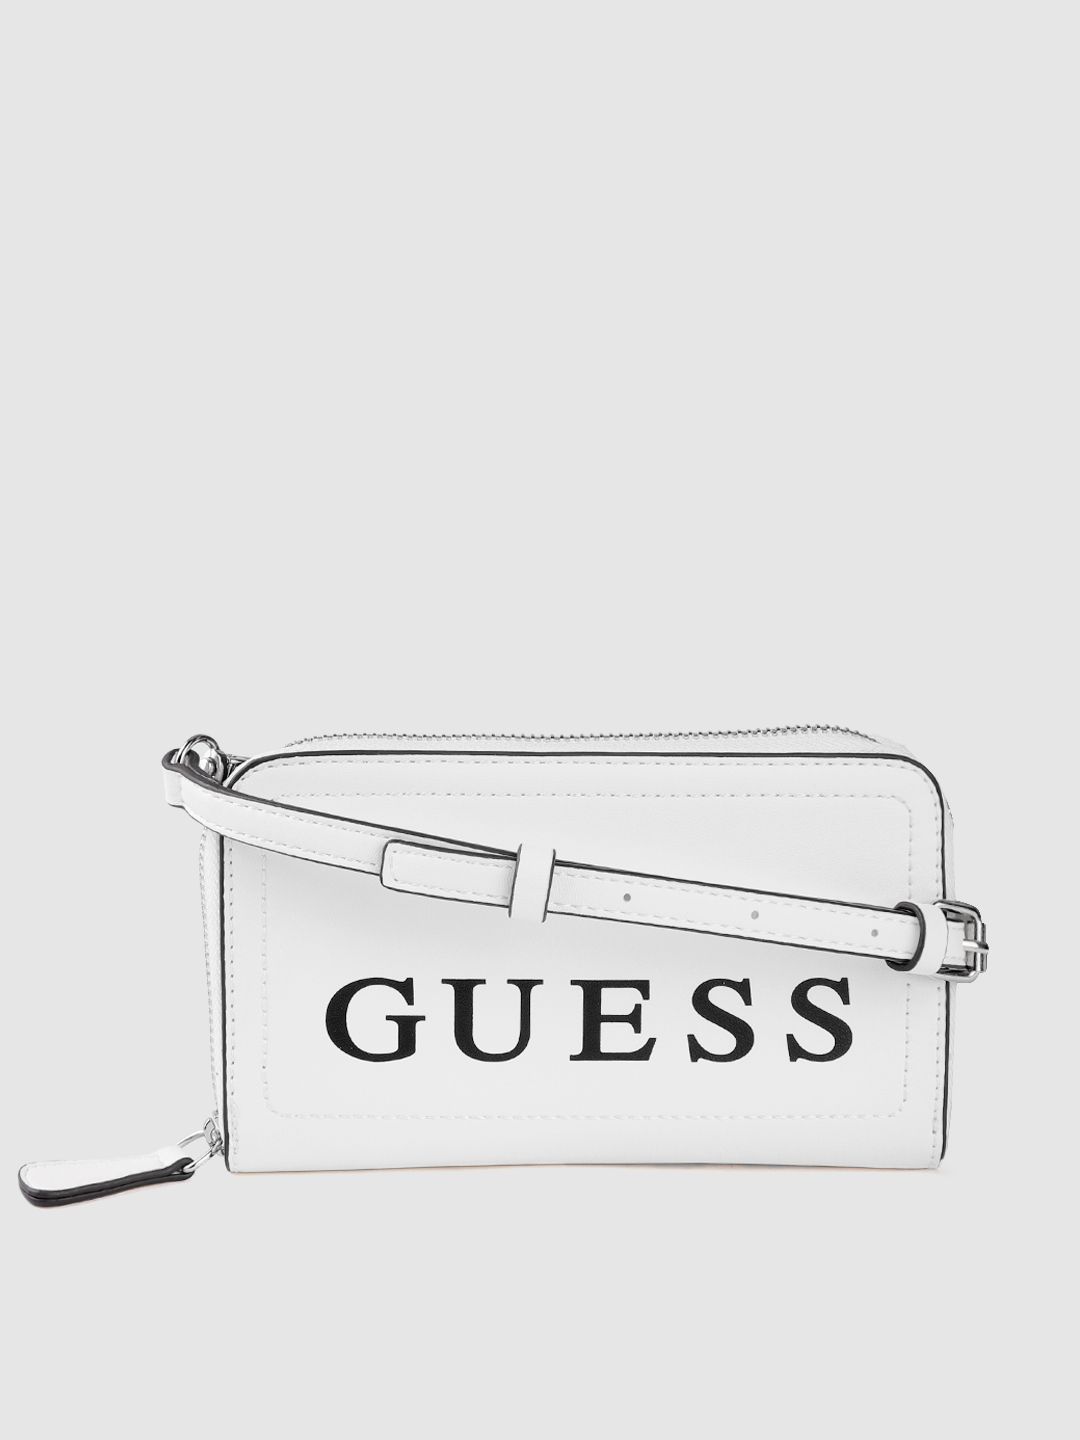 GUESS White & Black Brand Logo Print Sling Bag Price in India